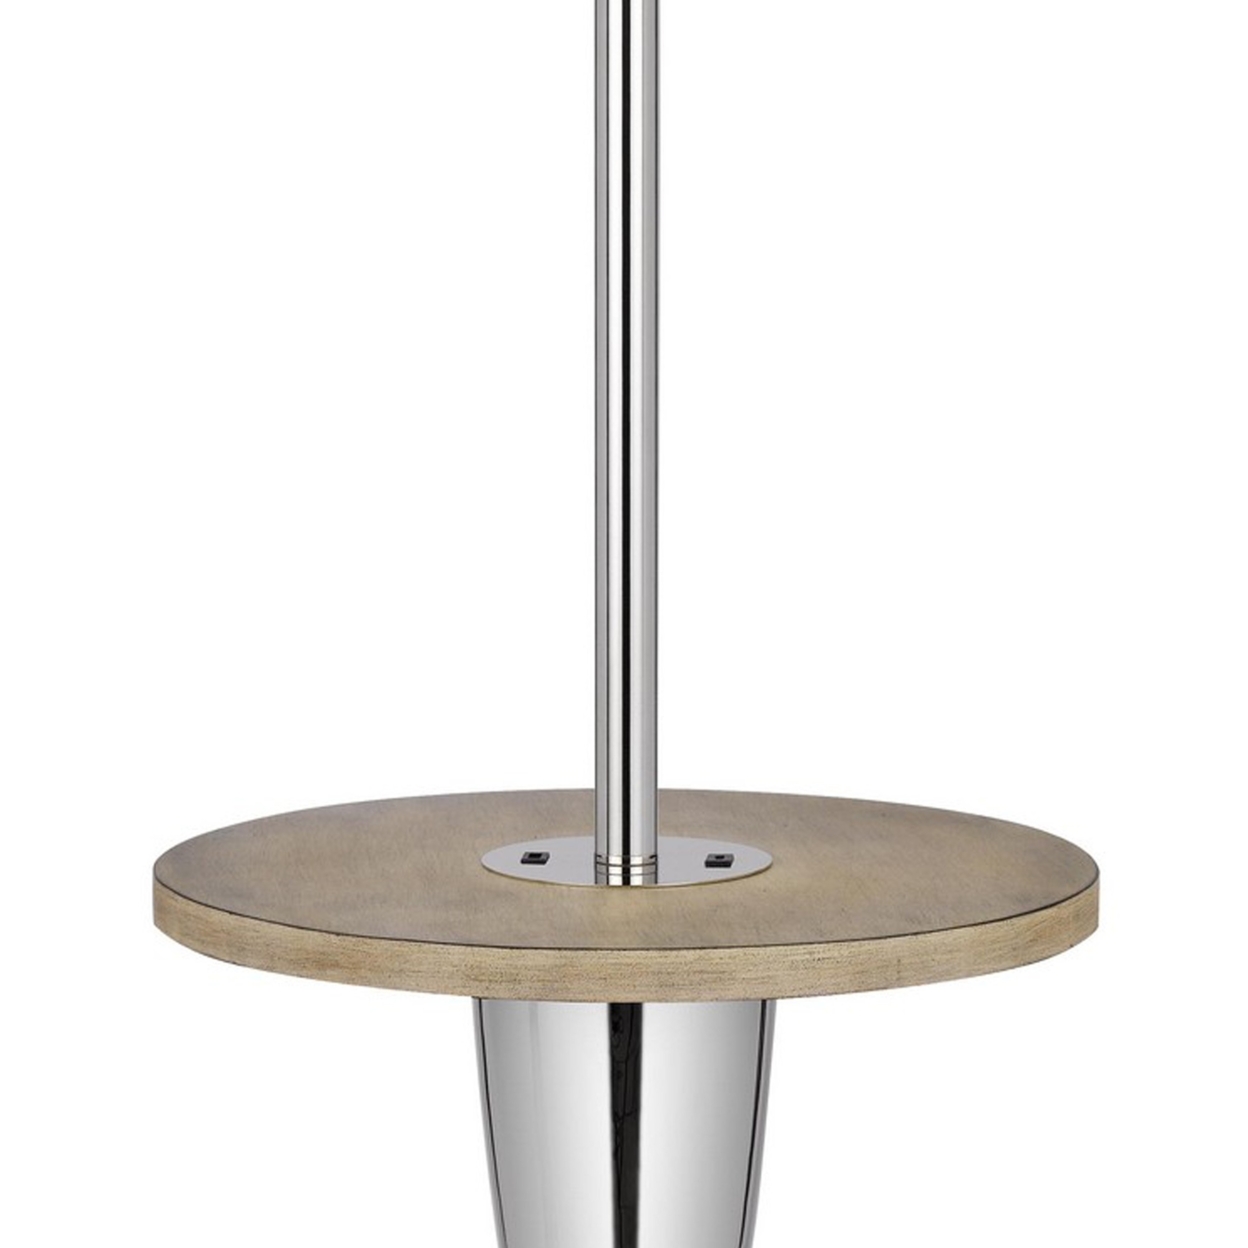 Charlie 61 Inch Modern Floor Lamp, Wood Table, 1 USB, Glossy, White, Brown- Saltoro Sherpi